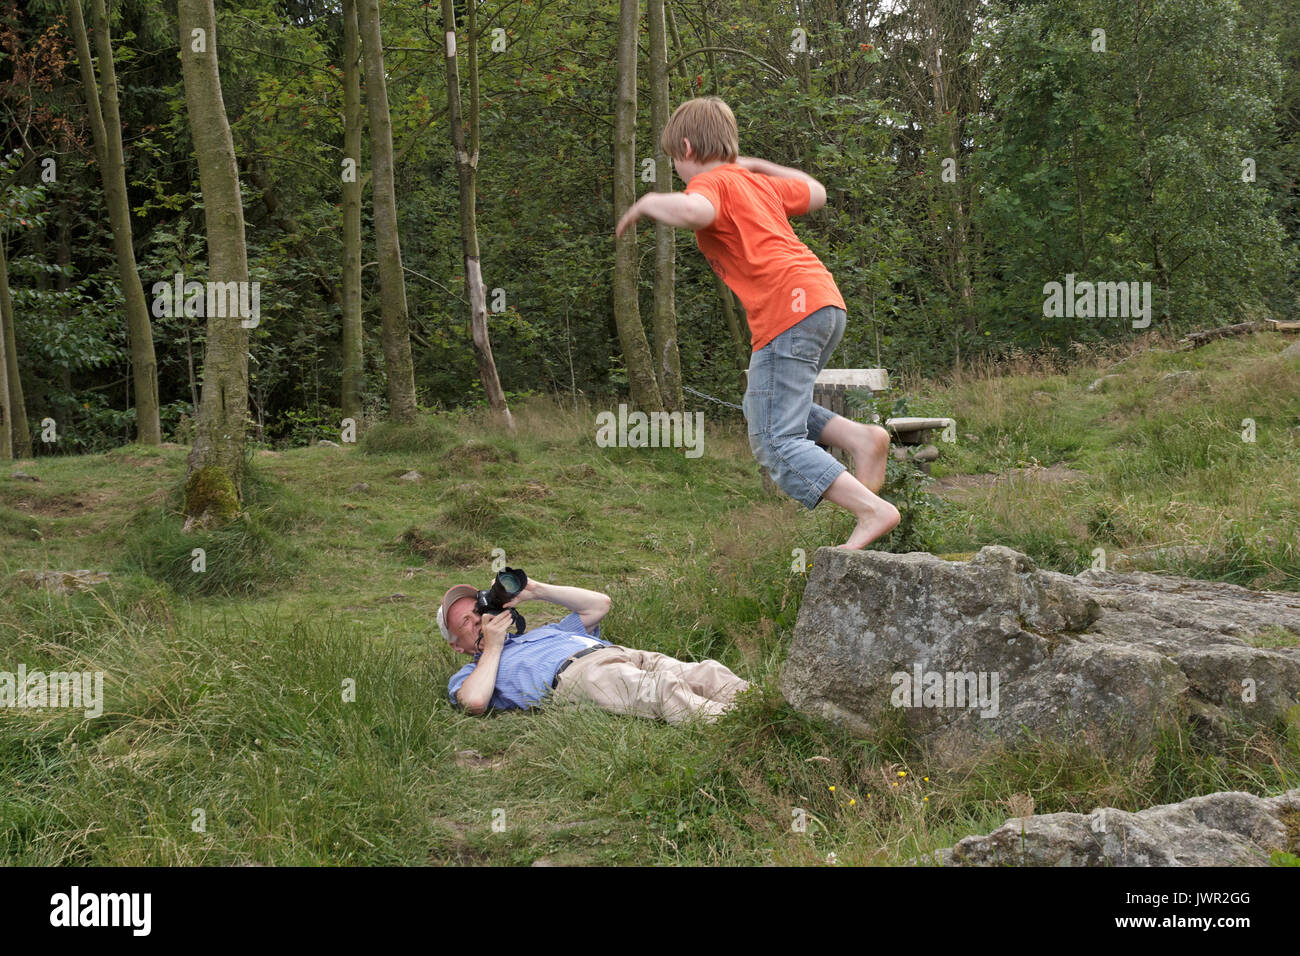 man taking photo of jumping boy Stock Photo